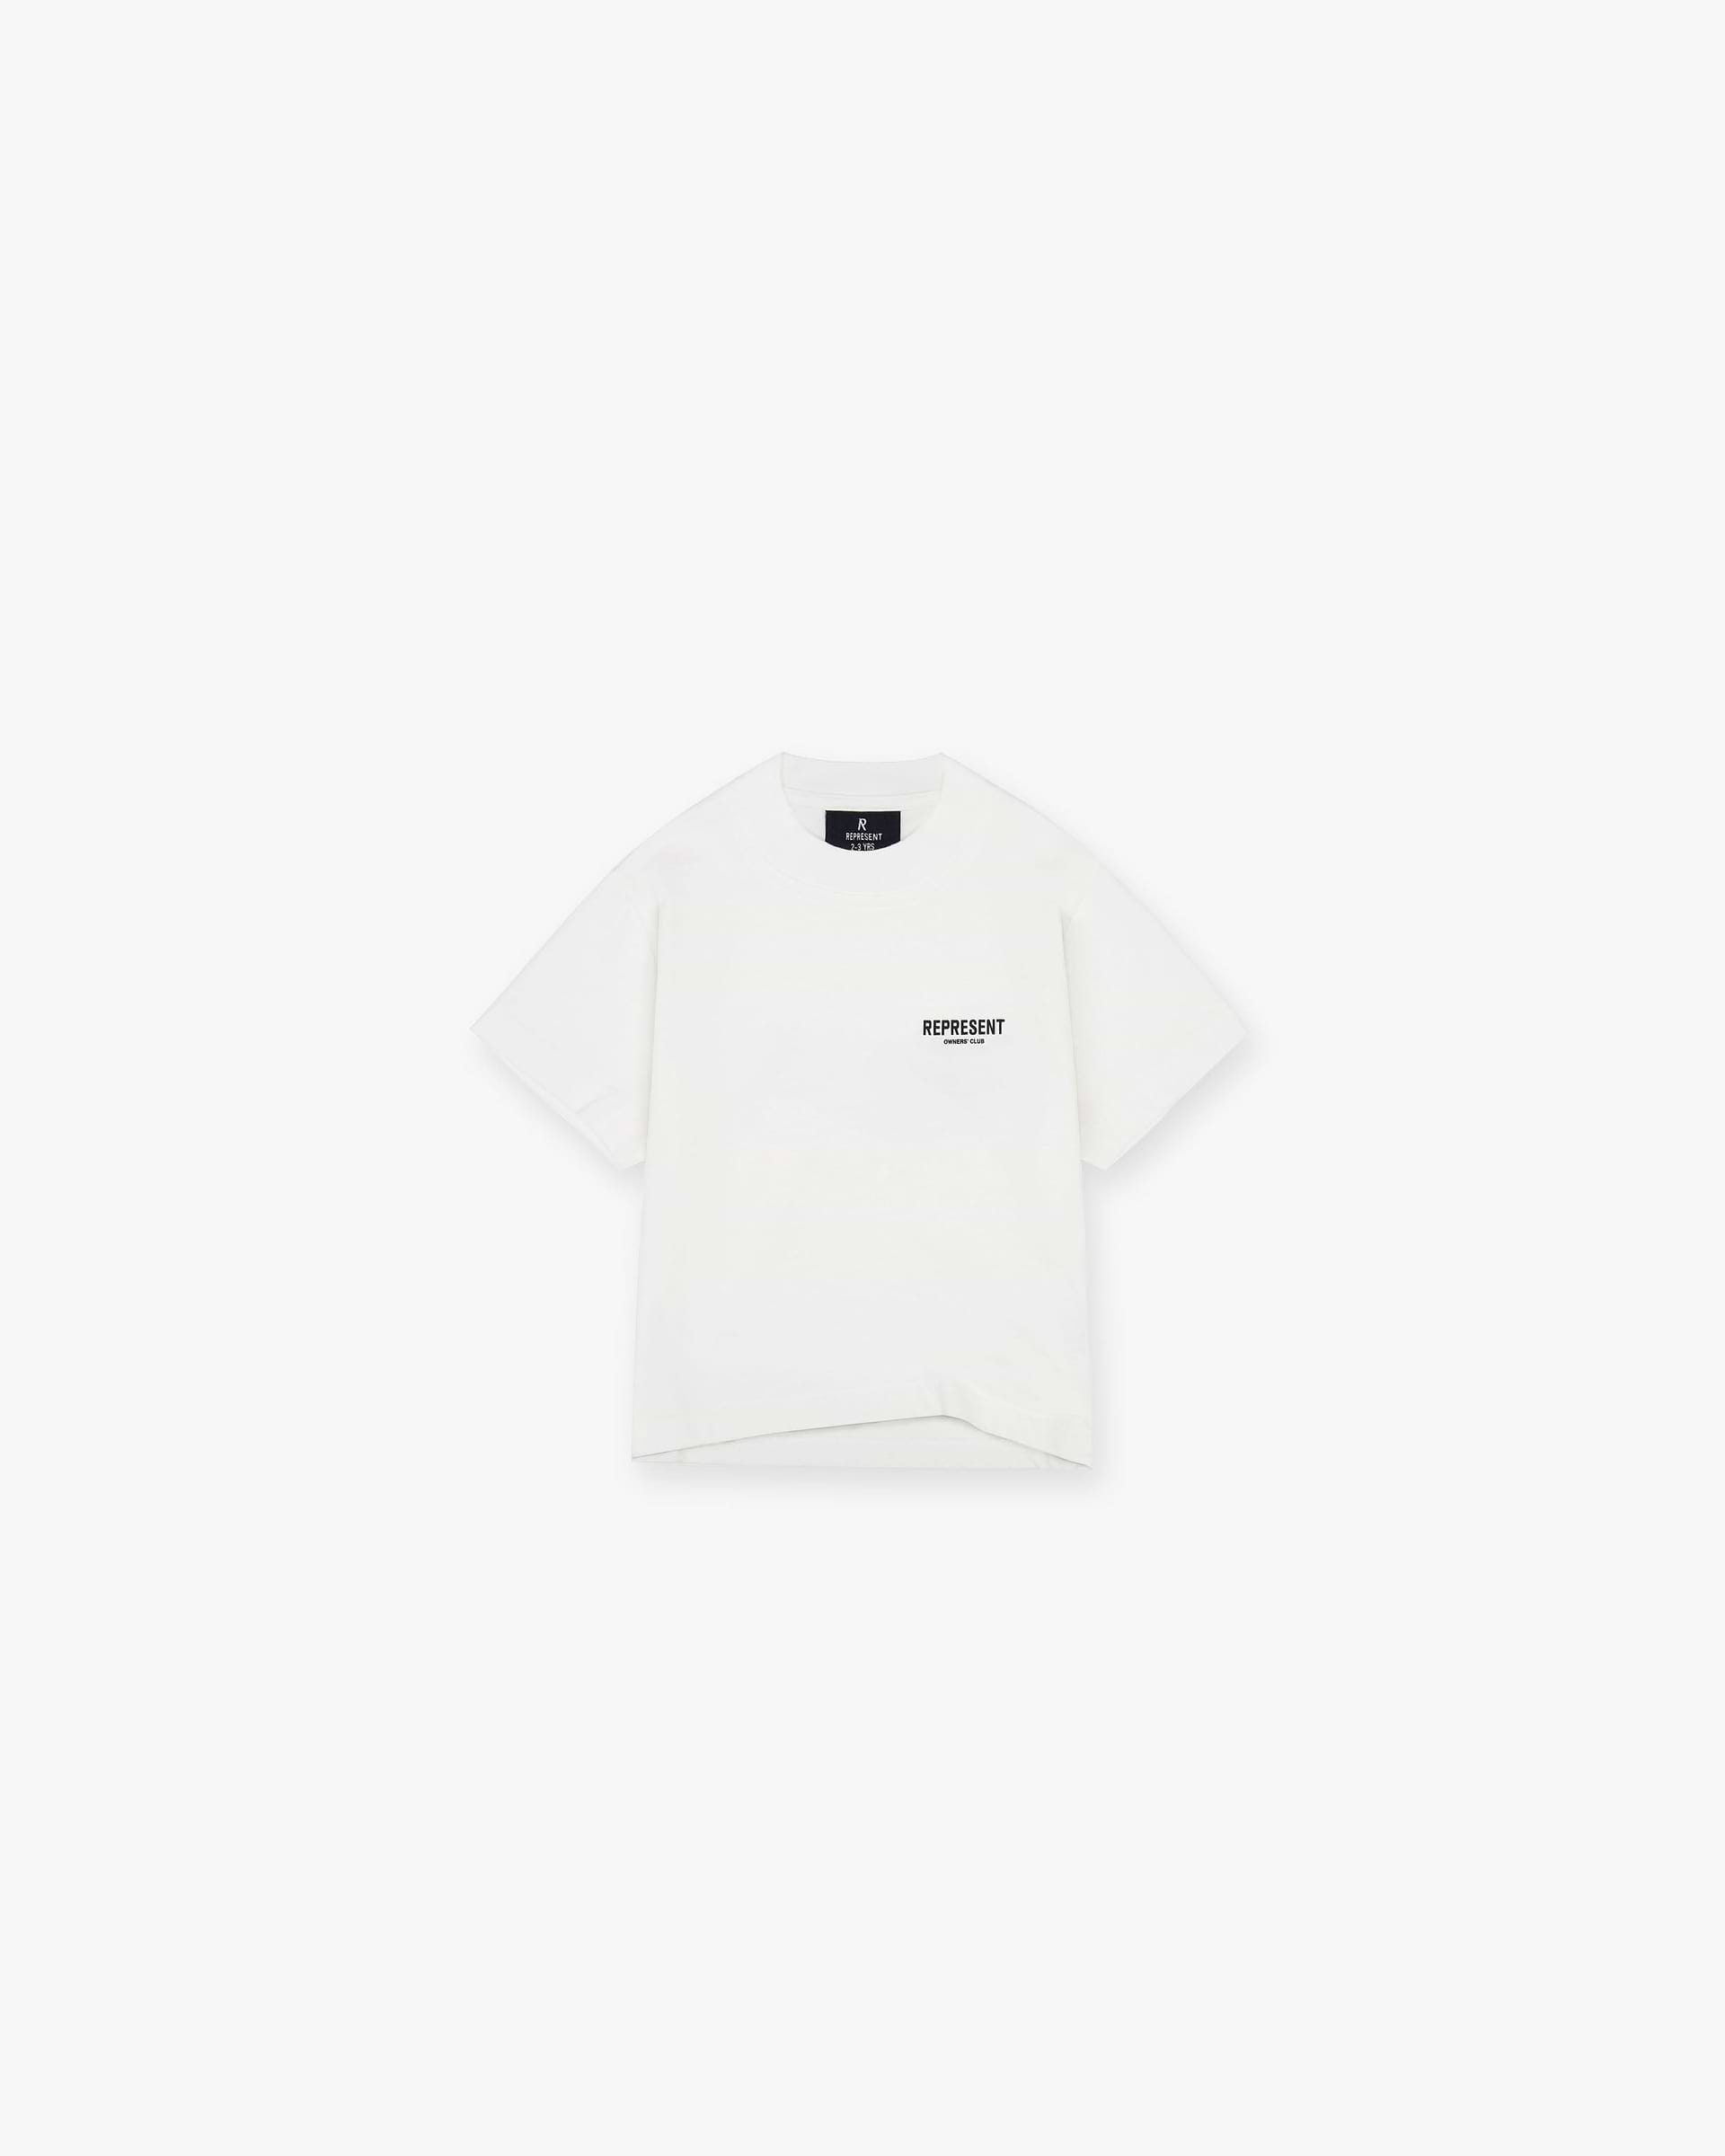 Represent Mini Owners Club T-Shirt | Flat White T-Shirts Owners Club | Represent Clo